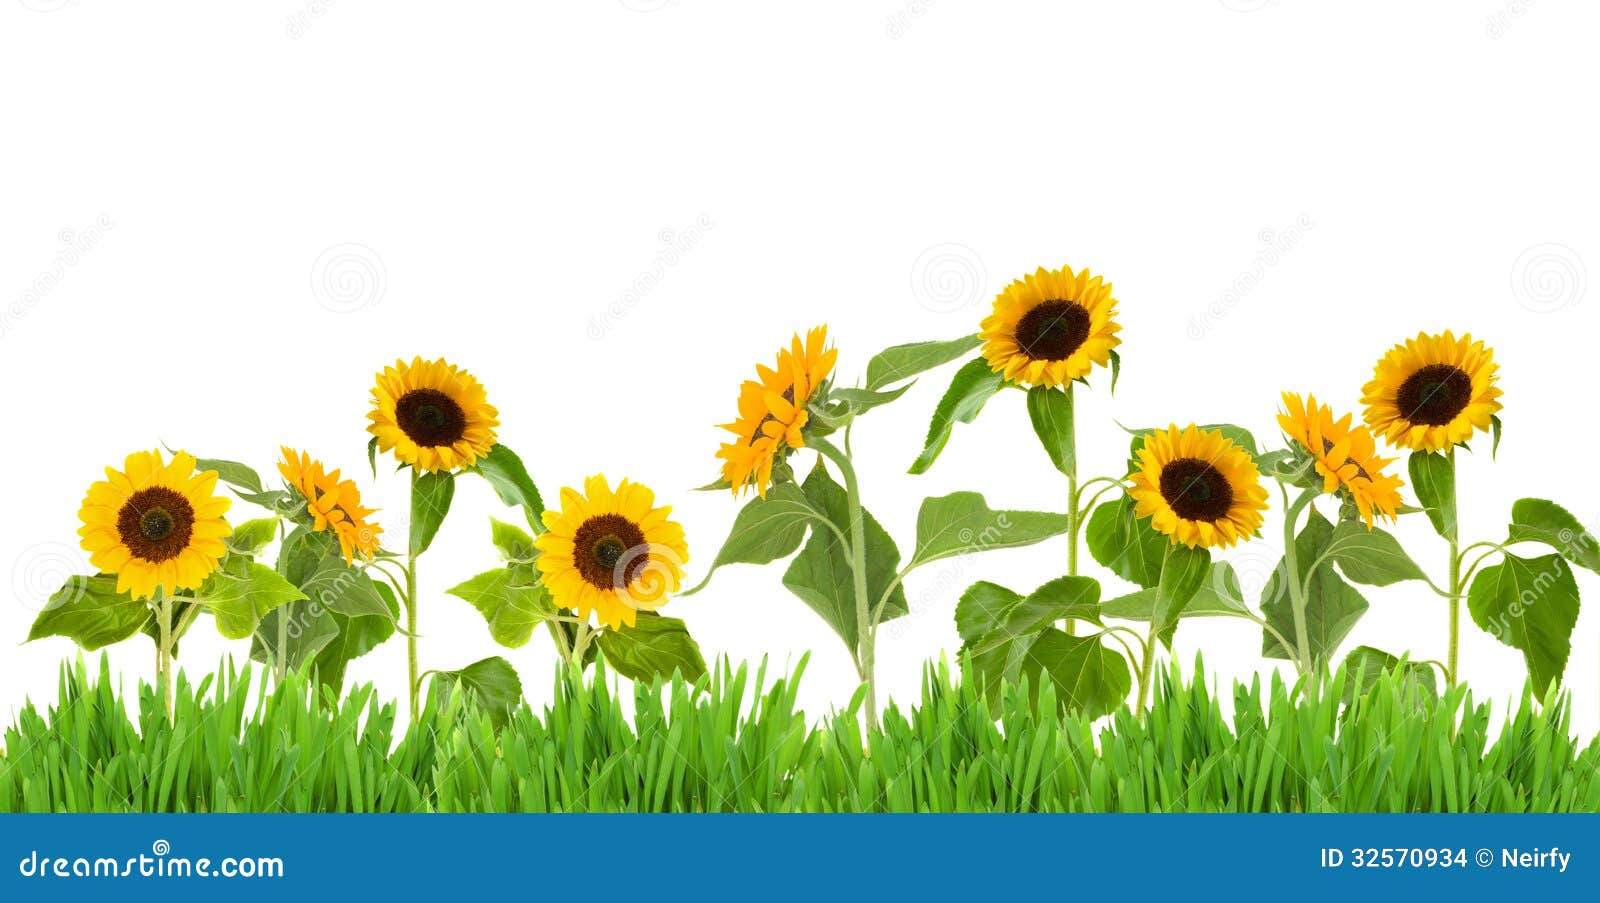 Bight Sunflower Border Stock Images - Image: 32570934